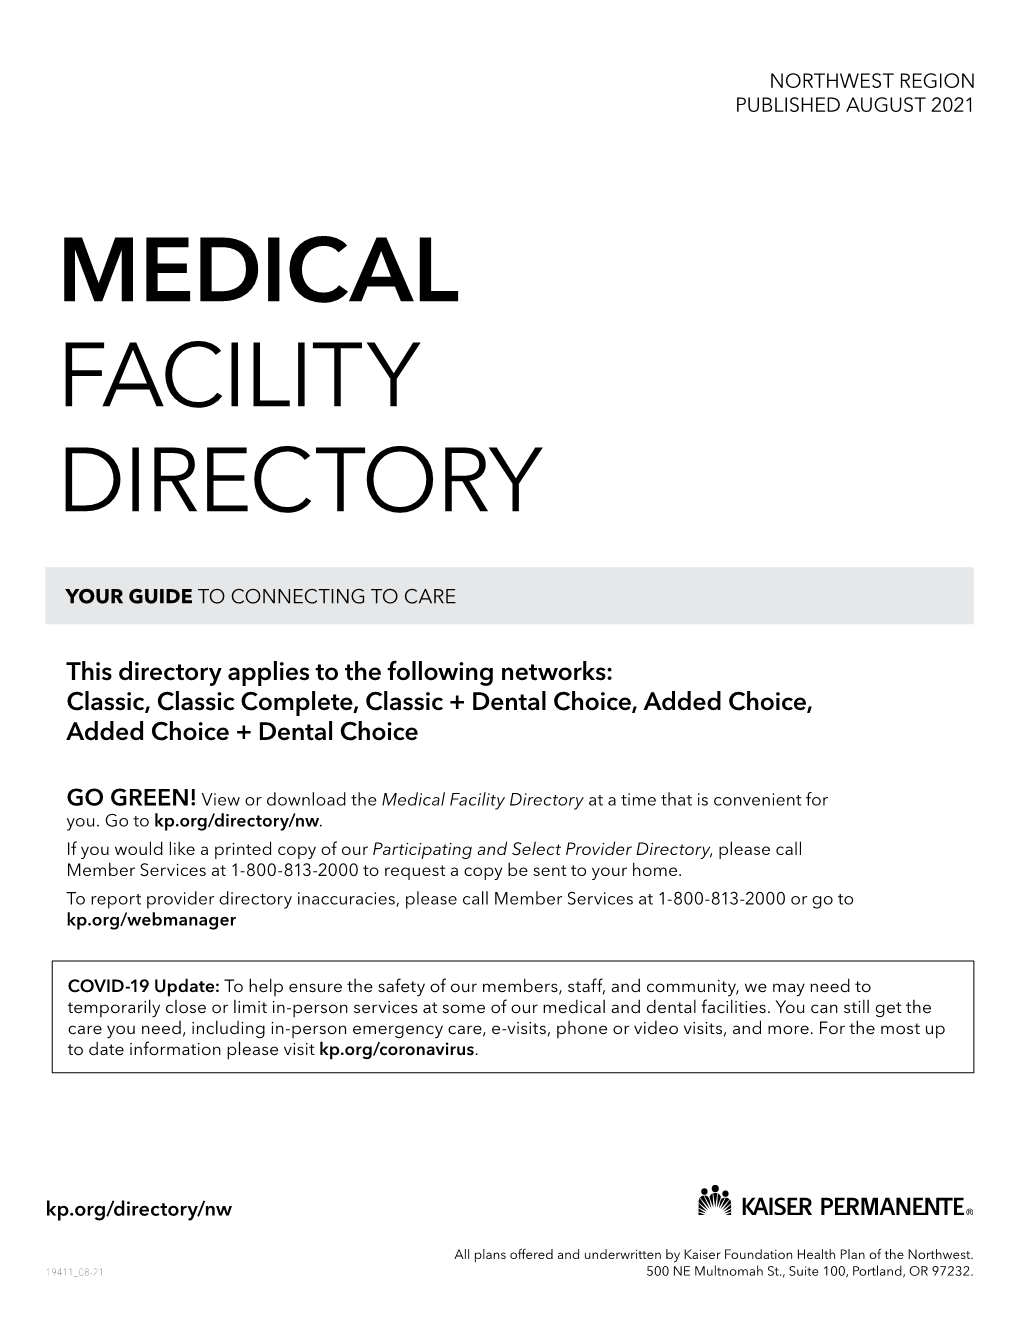 Medical Facility Directory 1